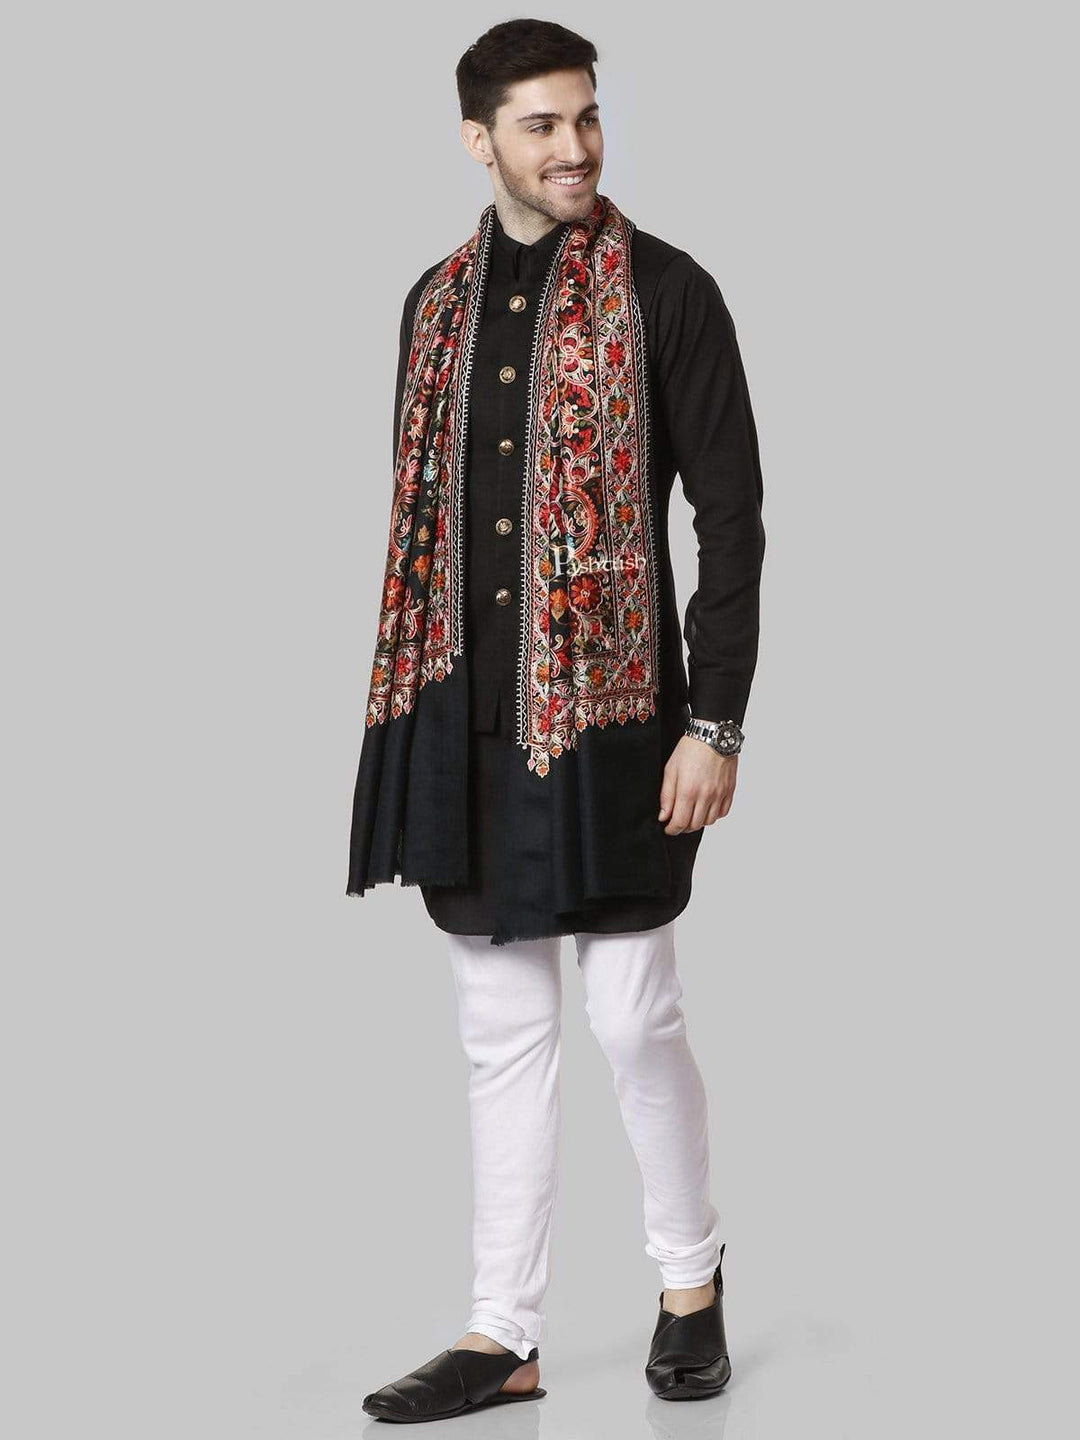 Pashtush India 70x200 Pashtush Mens Regal Collection, Fine Wool Embroidery Stole, Rich Black